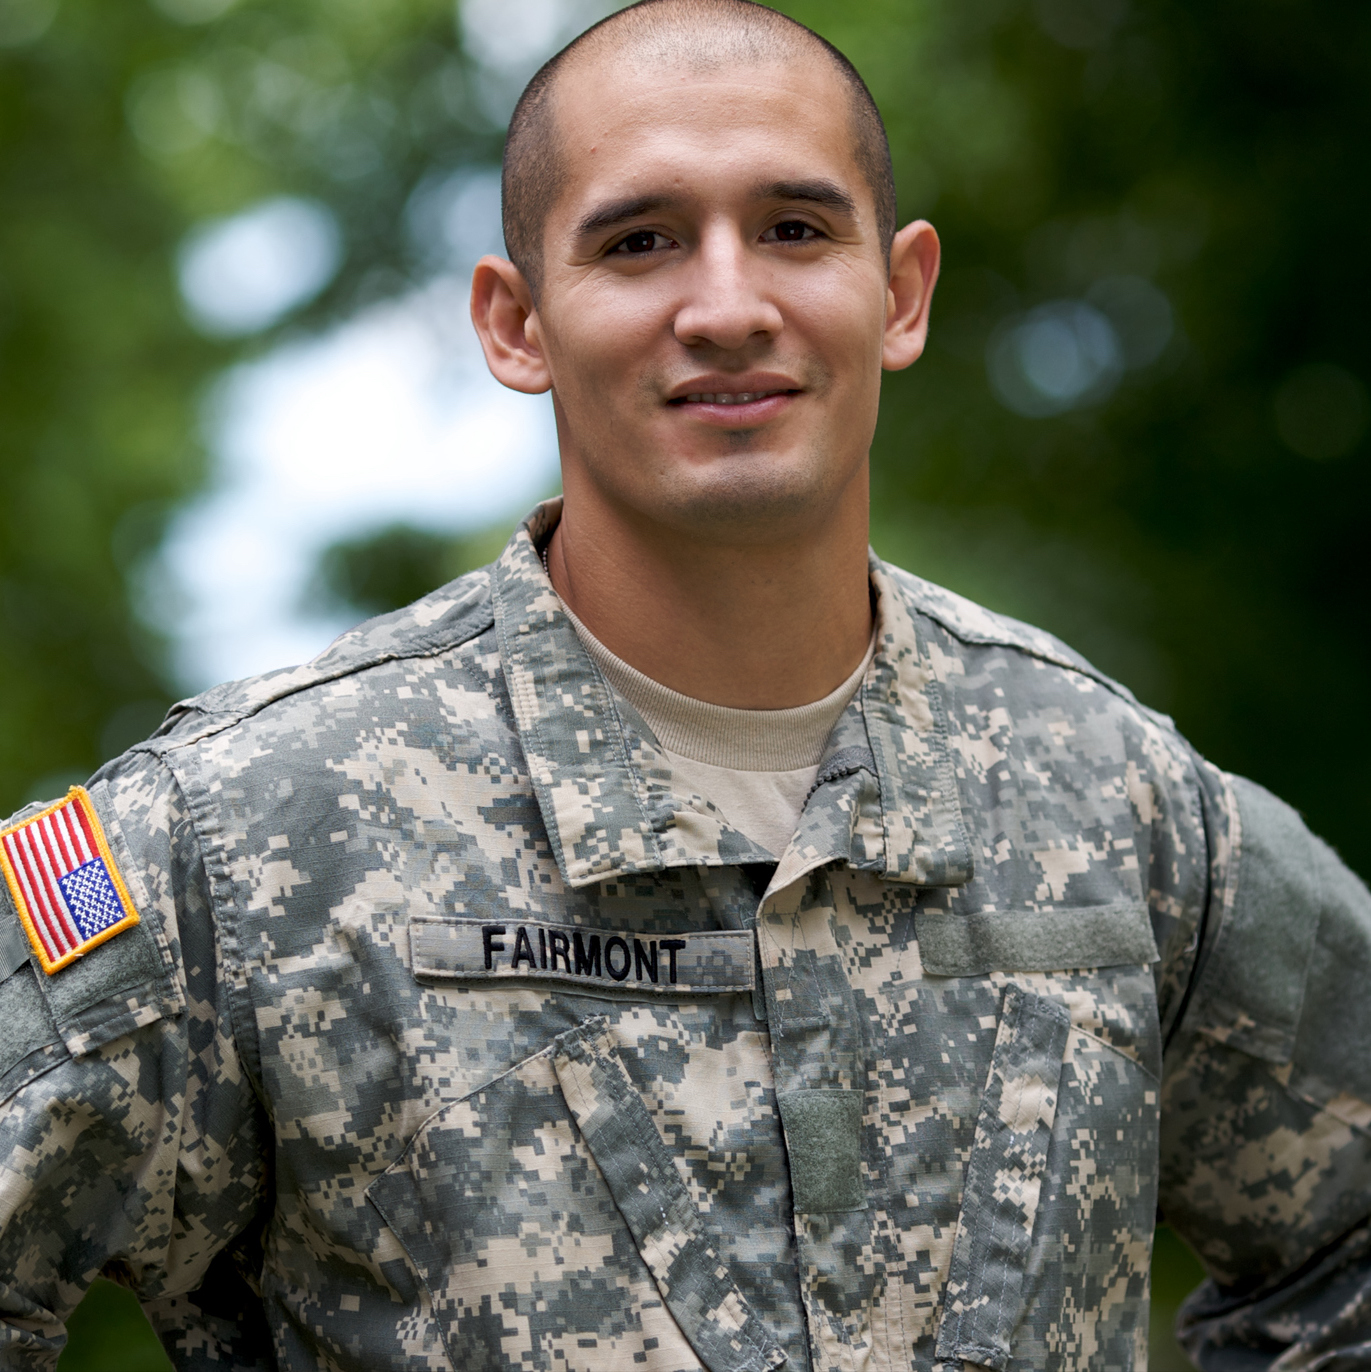 Portrait of Soldier in Uniform